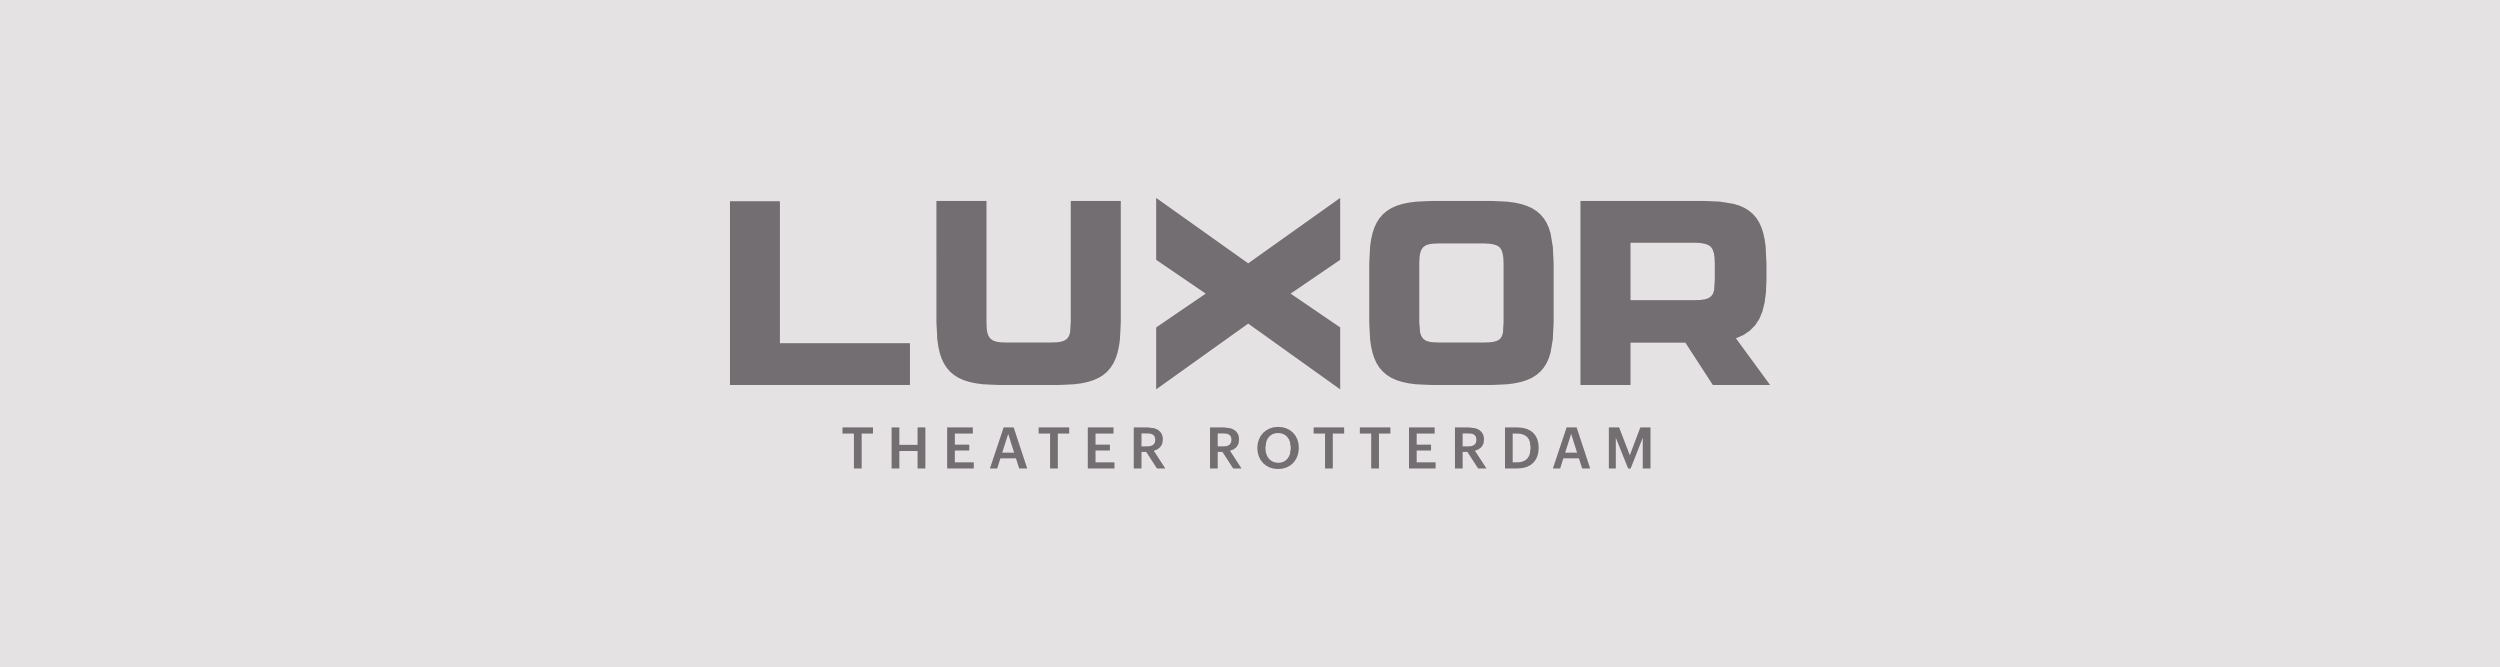 Luxor Theater Rotterdam